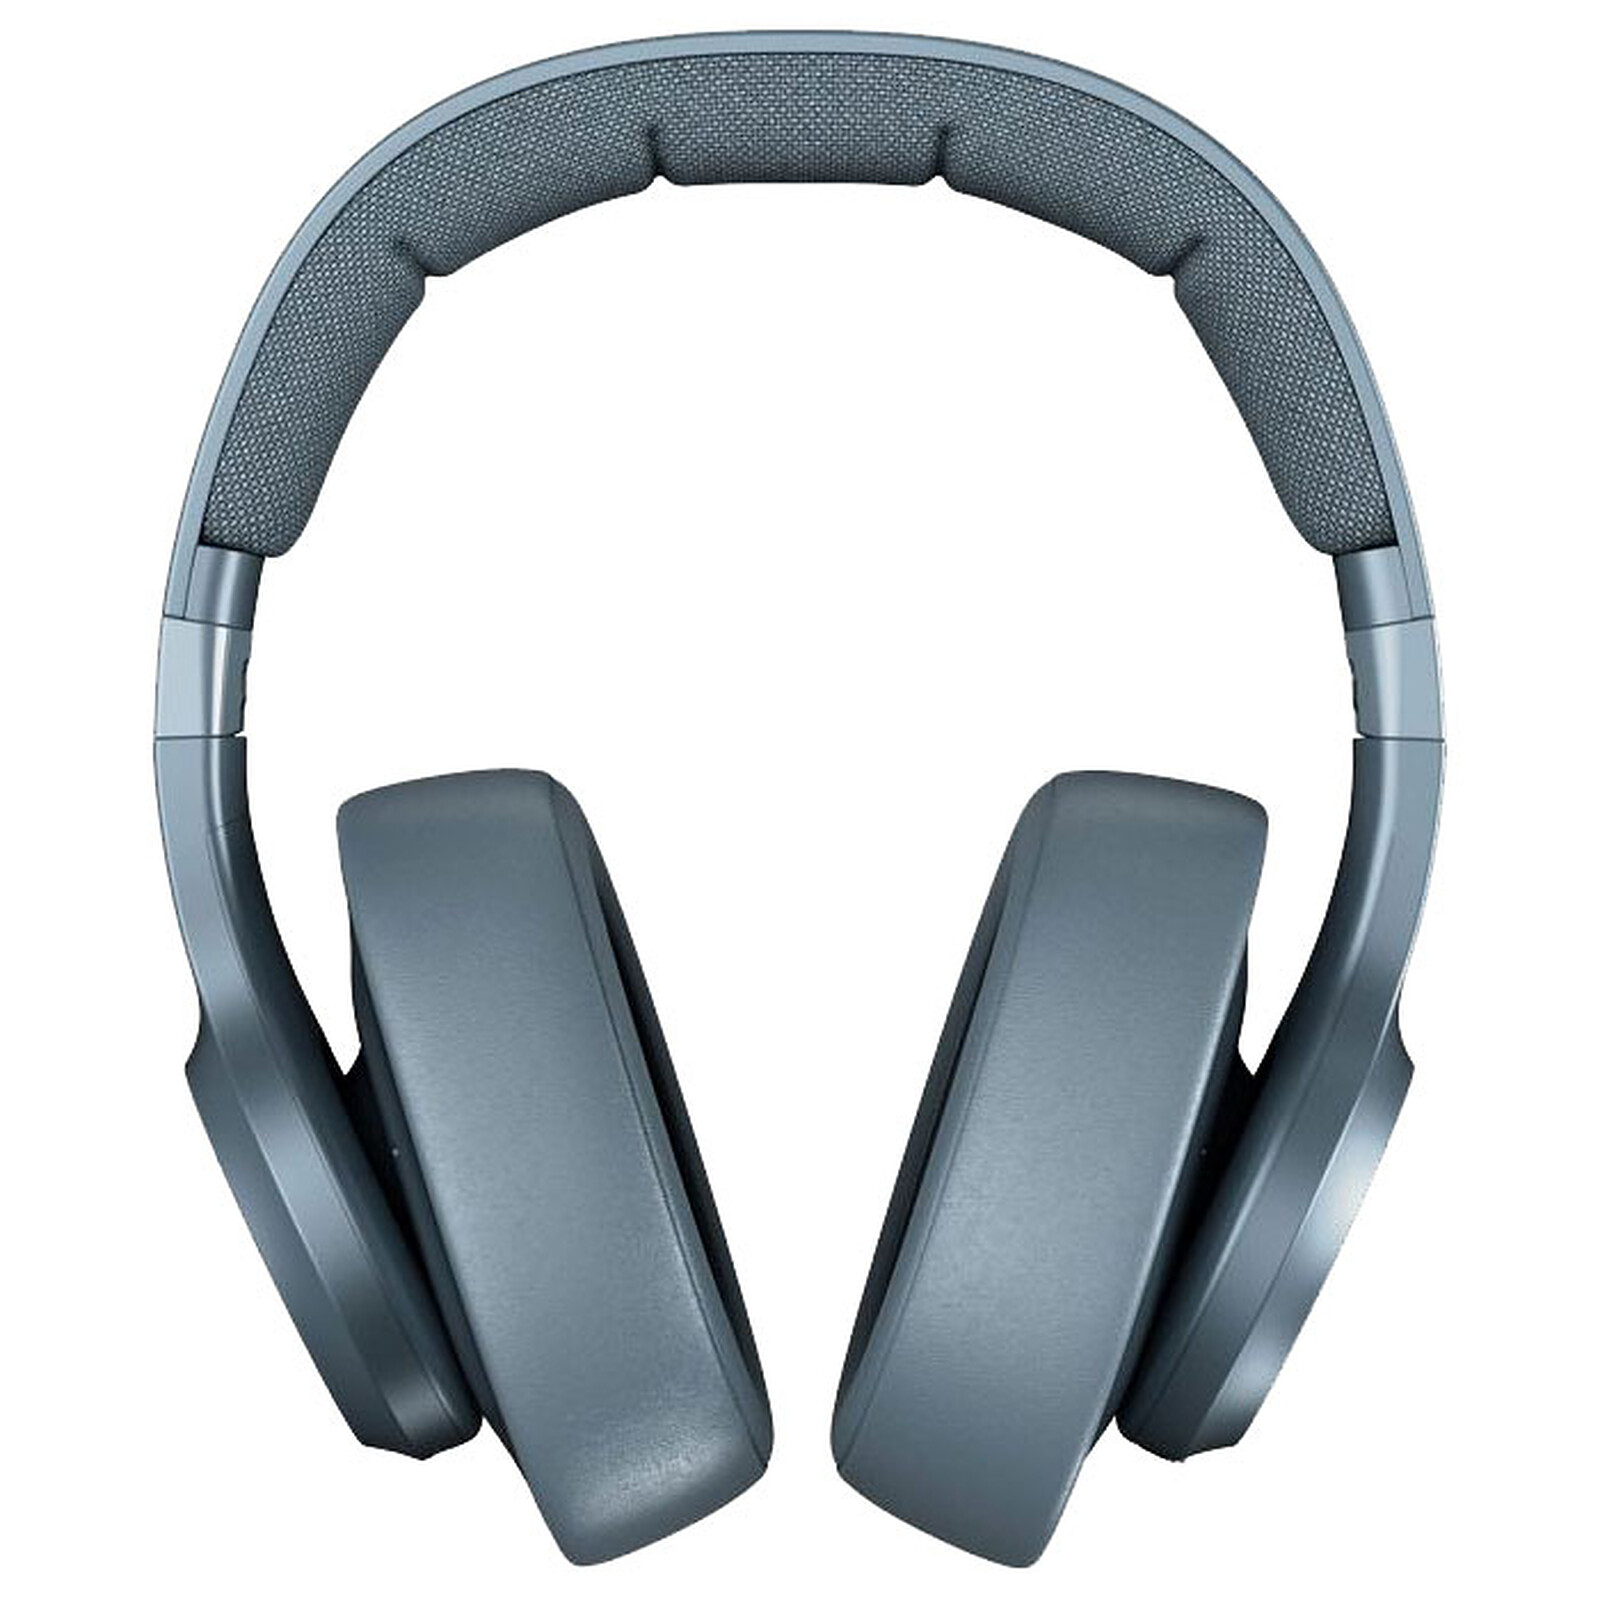 Dive - 3-year Blue Rebel 2 Clam LDLC warranty Fresh\'n - Headphones